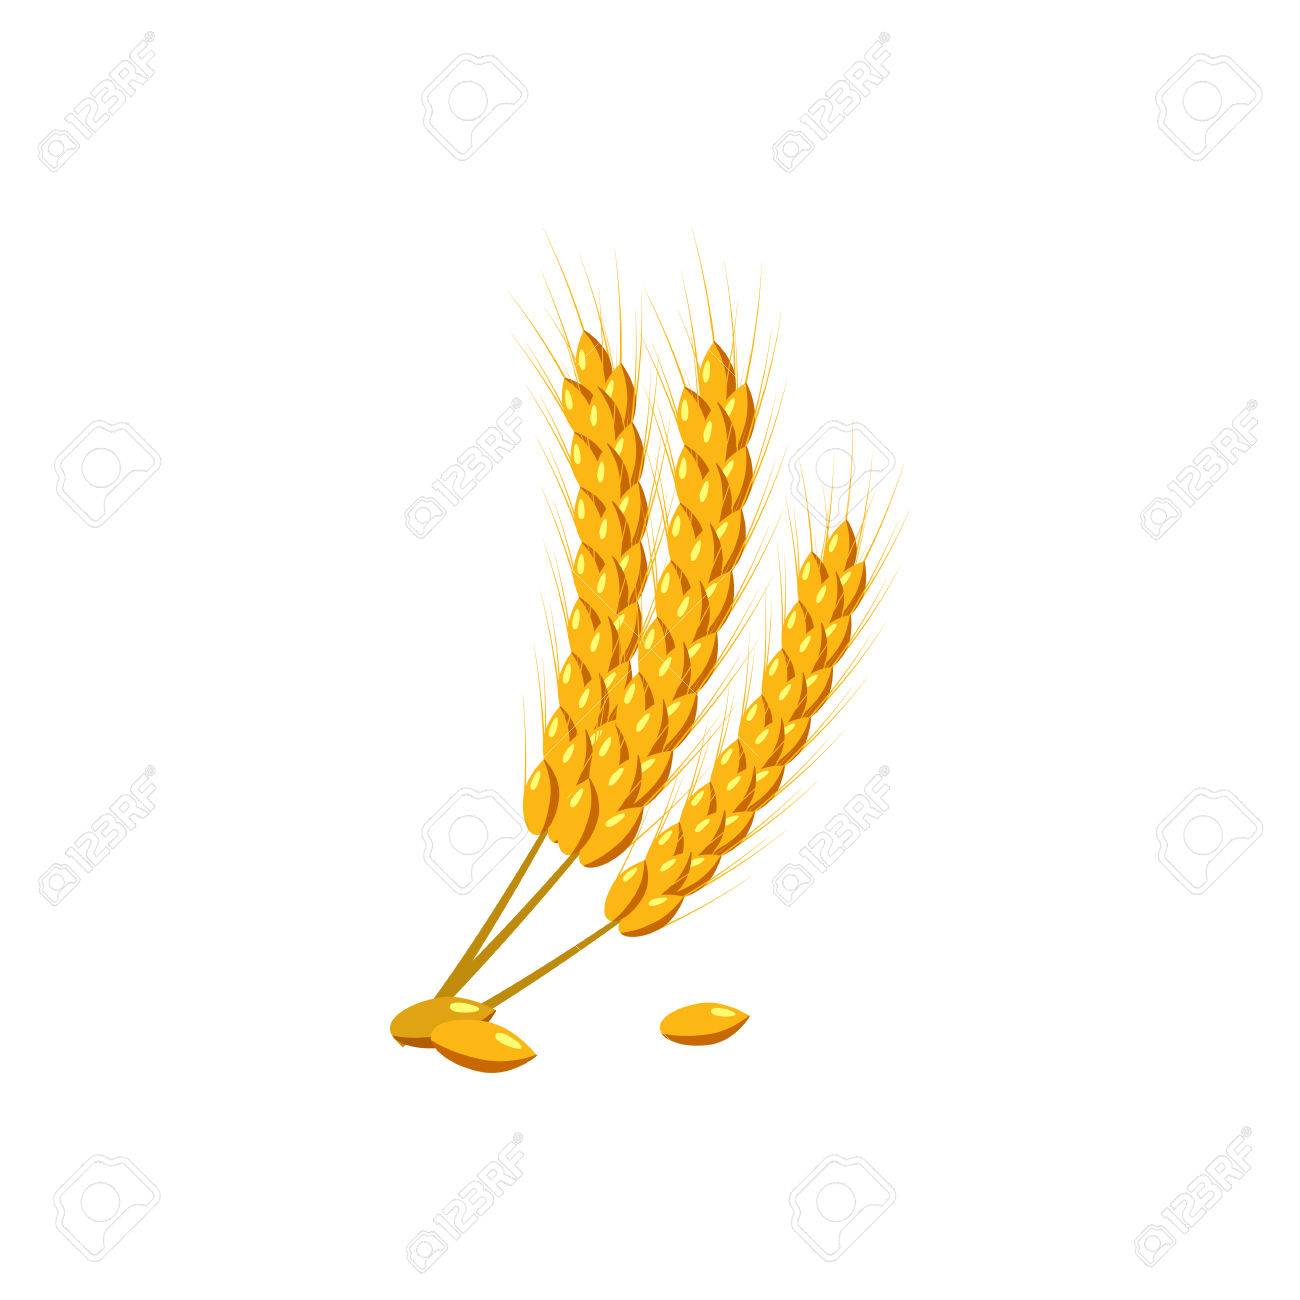 Barley icons | Noun Project